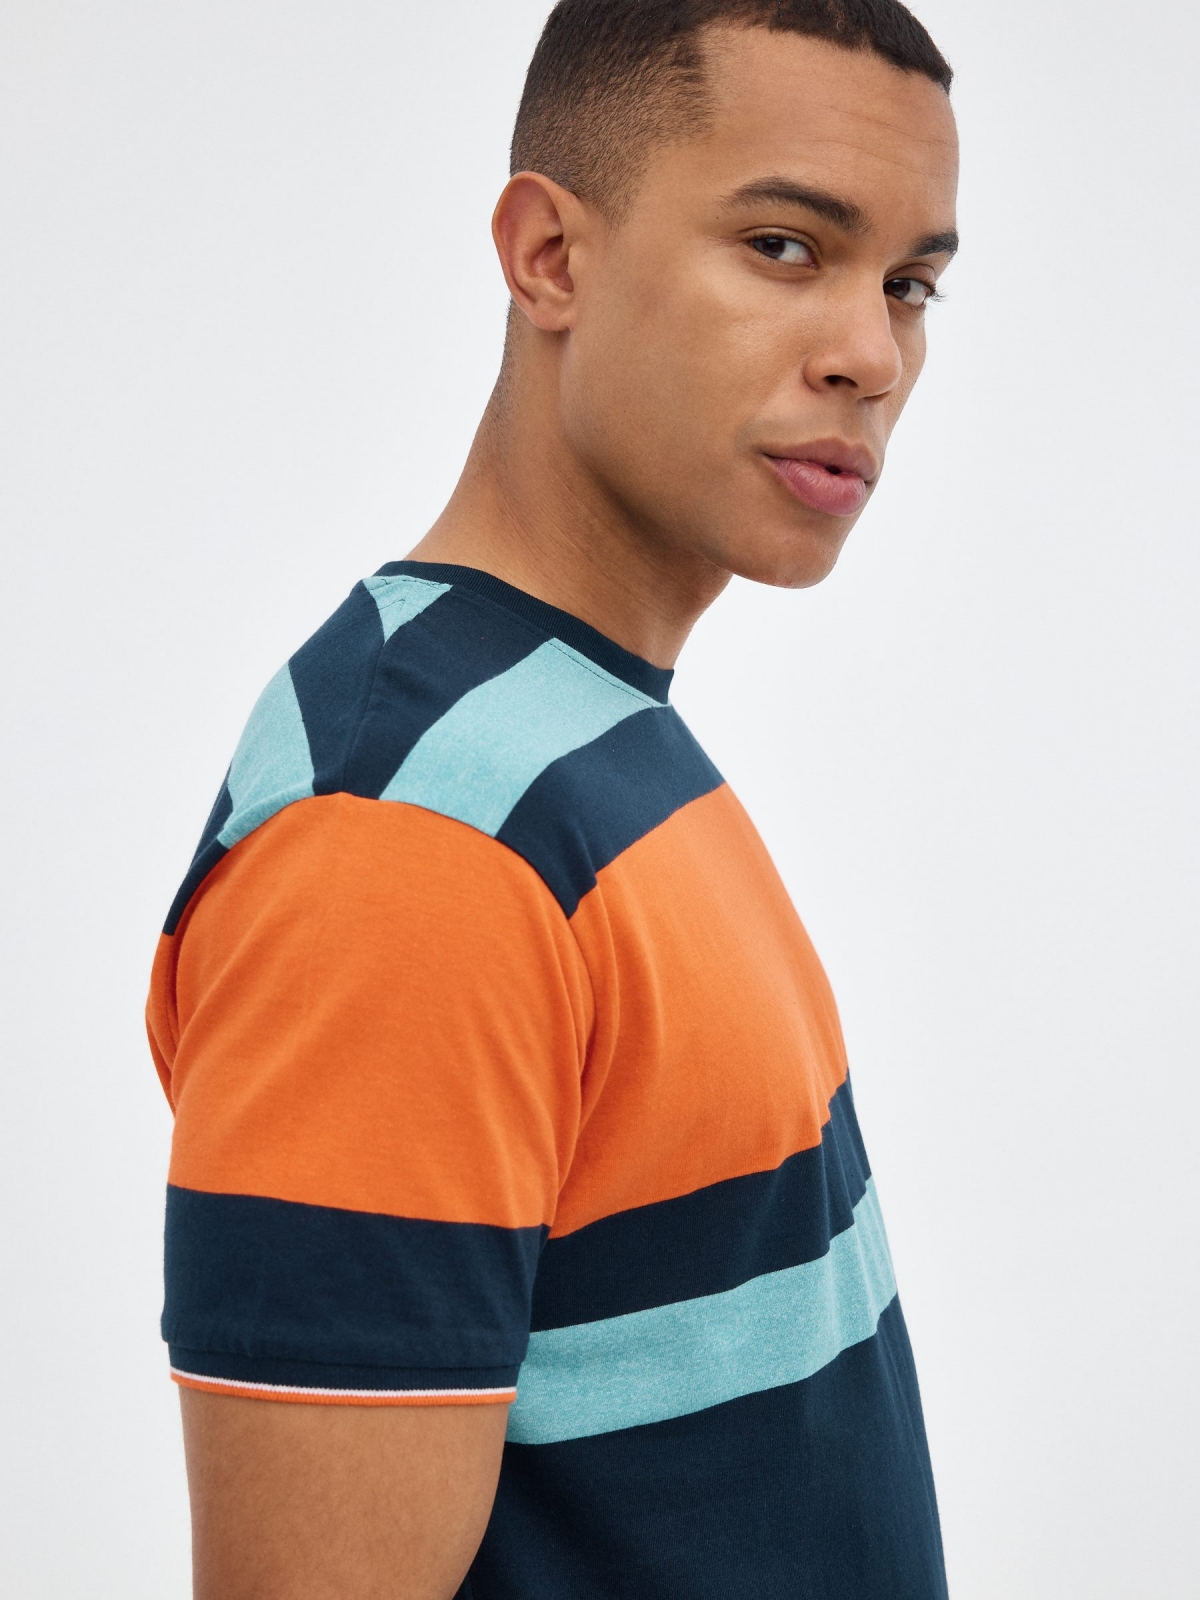 Camiseta rayas azul y naranja azul vista detalle